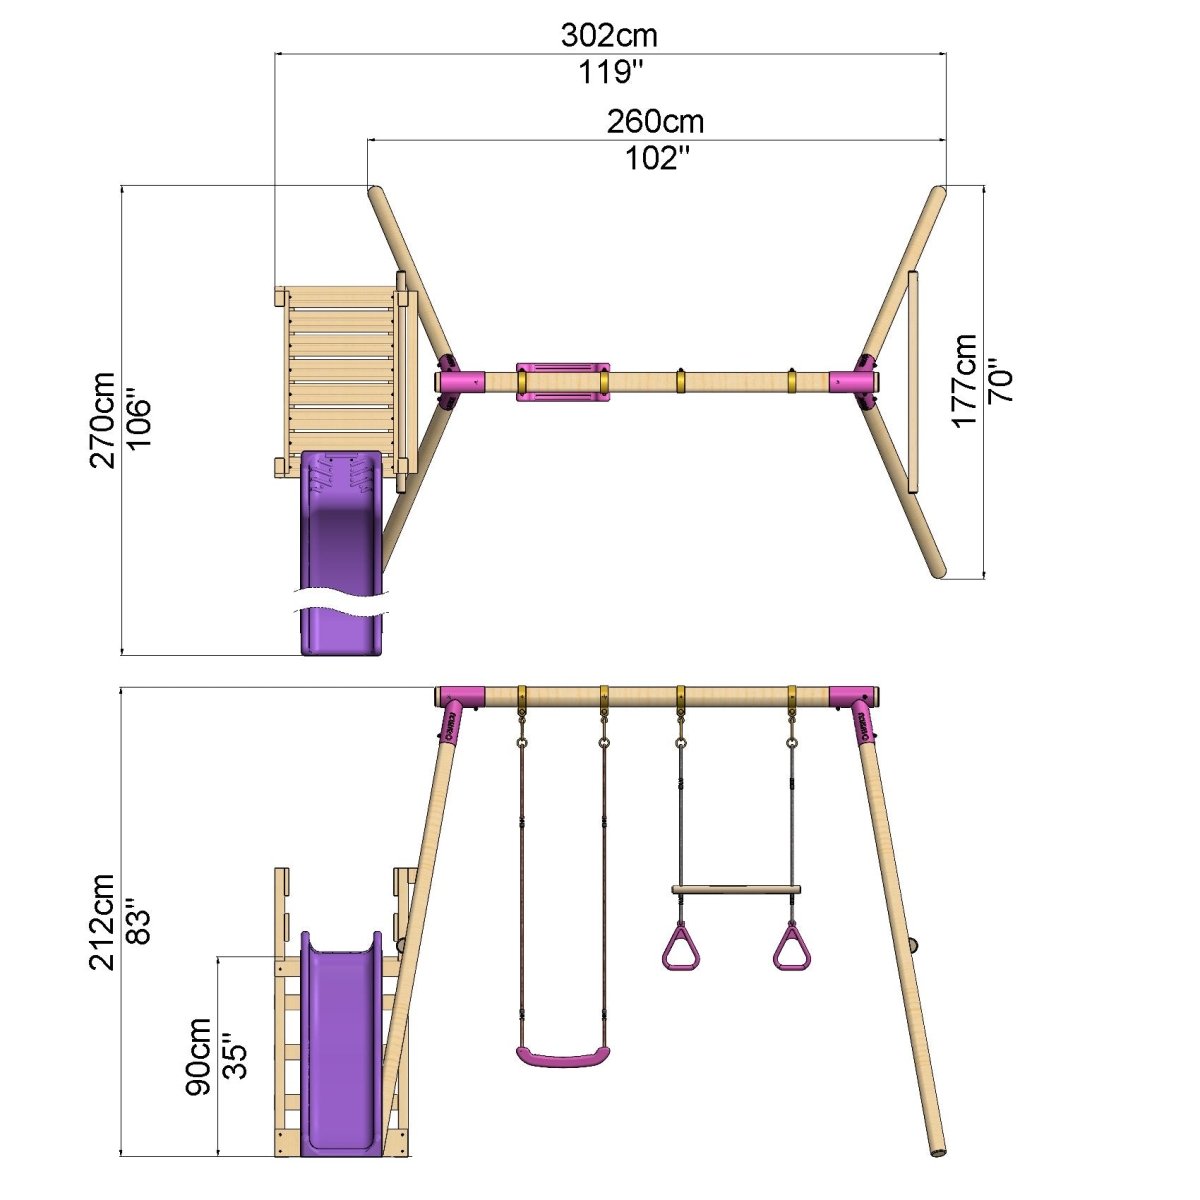 Rebo Wooden Swing Set plus Deck & Slide - Janus Pink